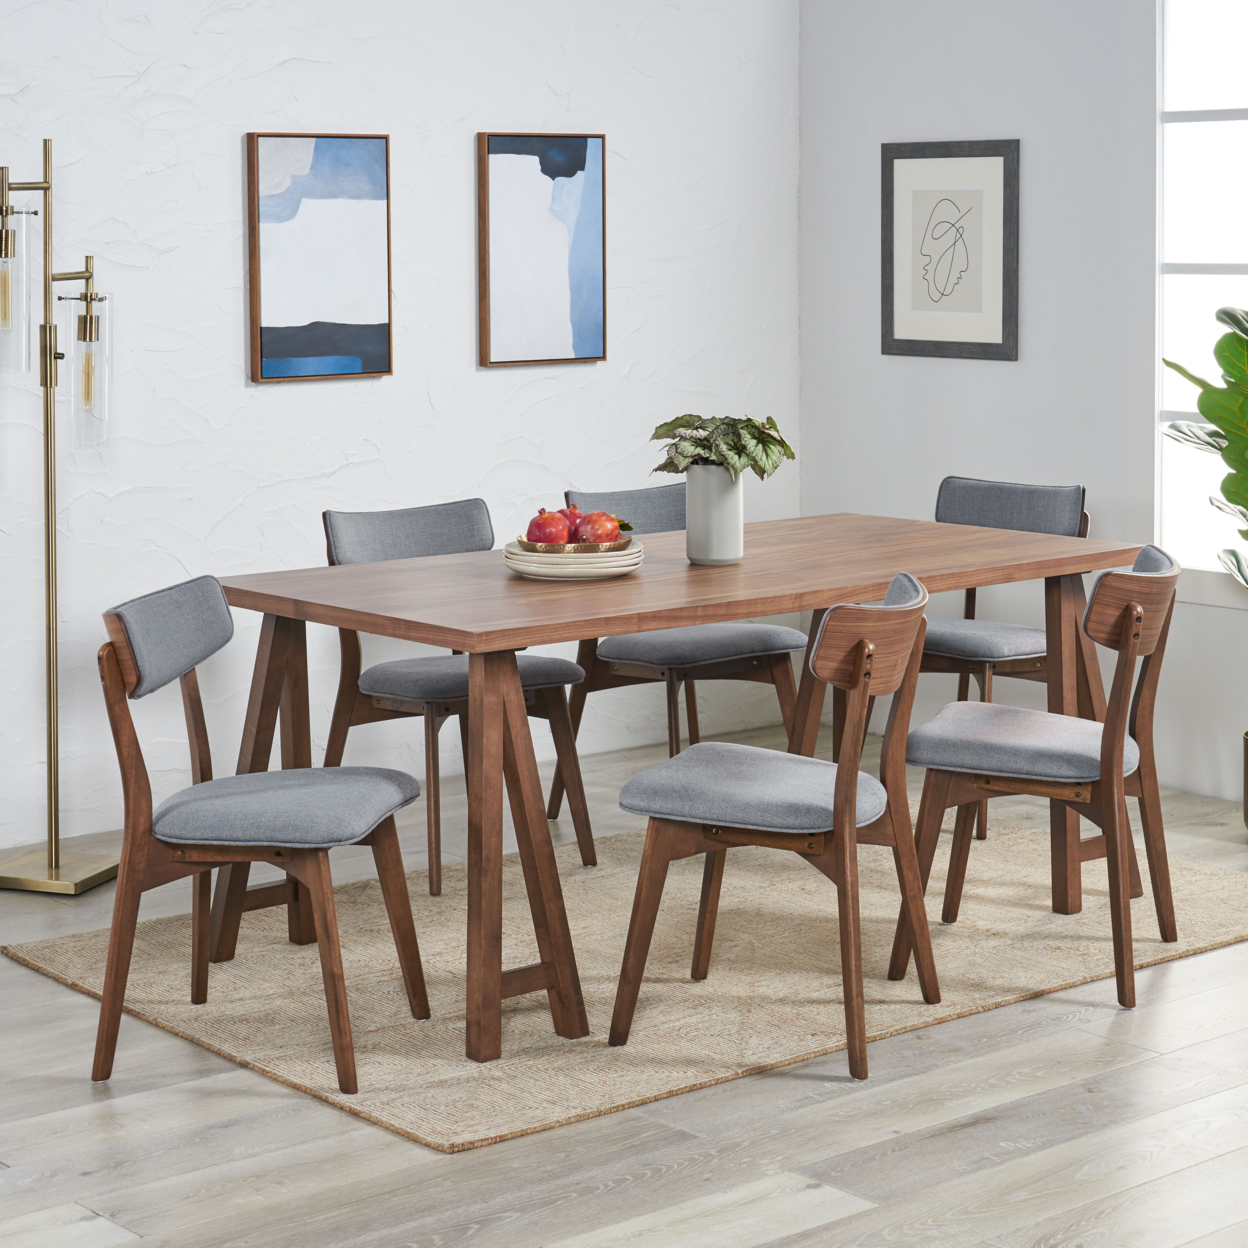 Turat Mid-Century Modern 7 Piece Dining Set With A-Frame Table - Walnut/dark Gray